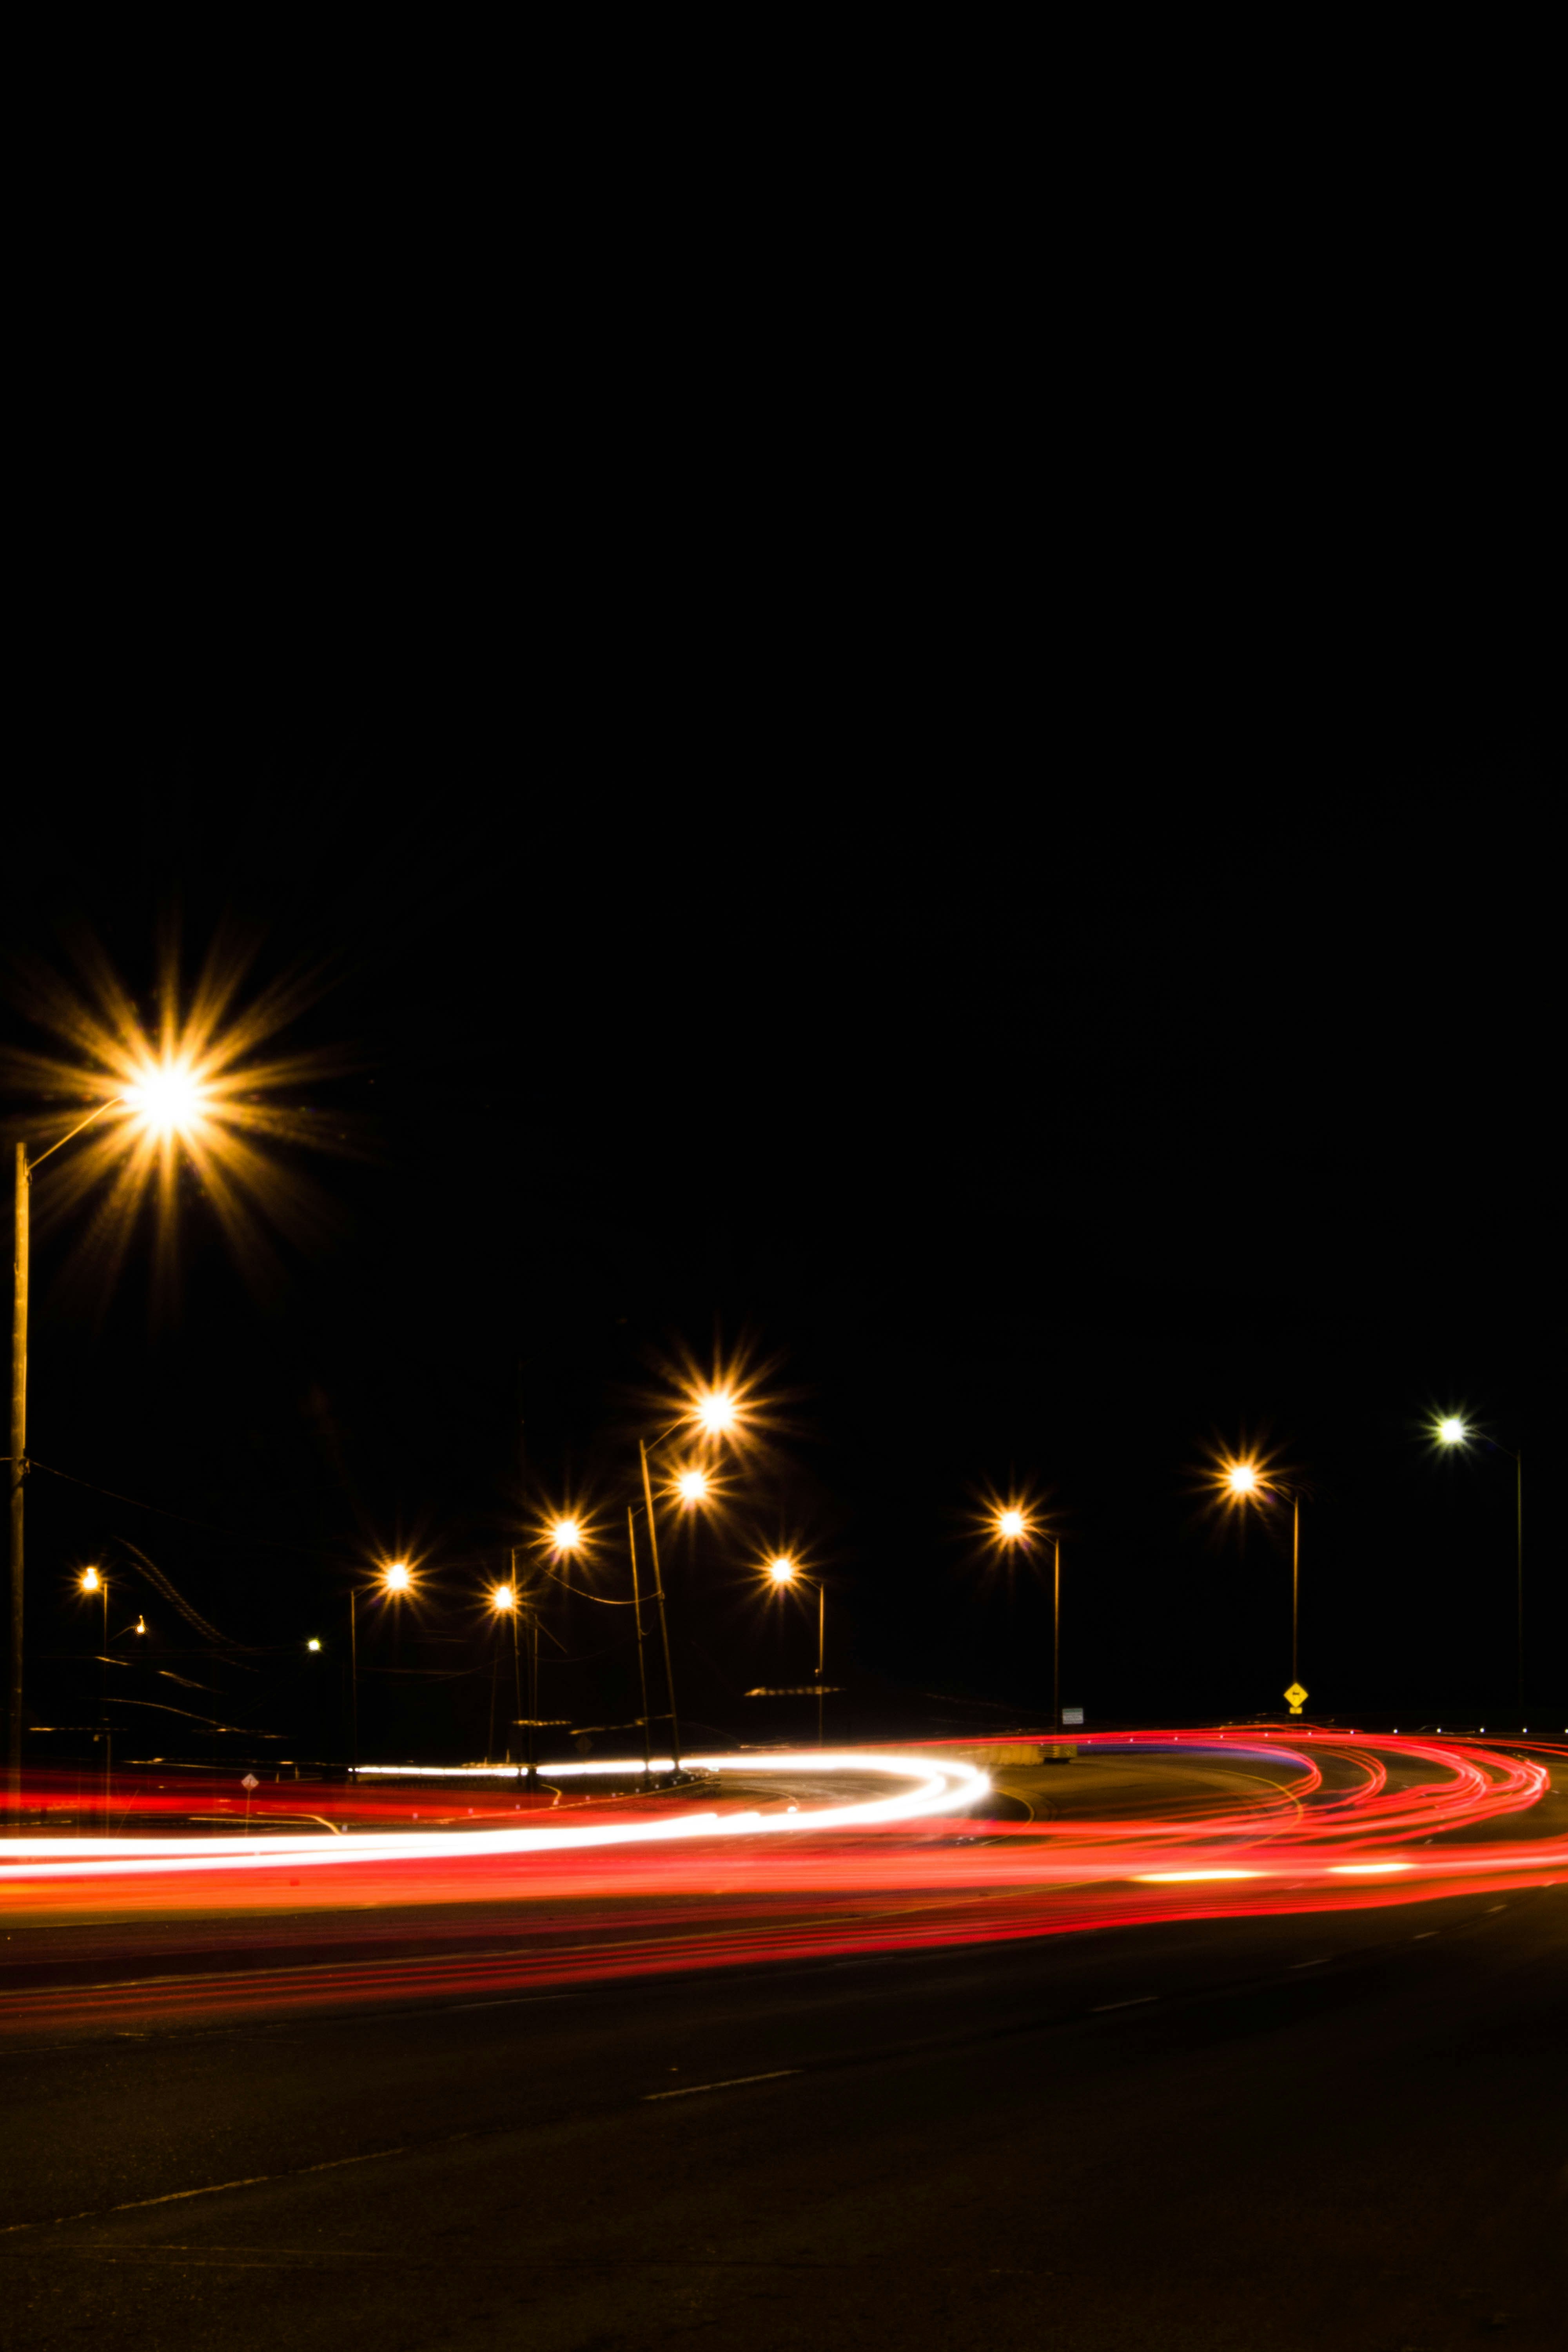 Toronto light trails at night